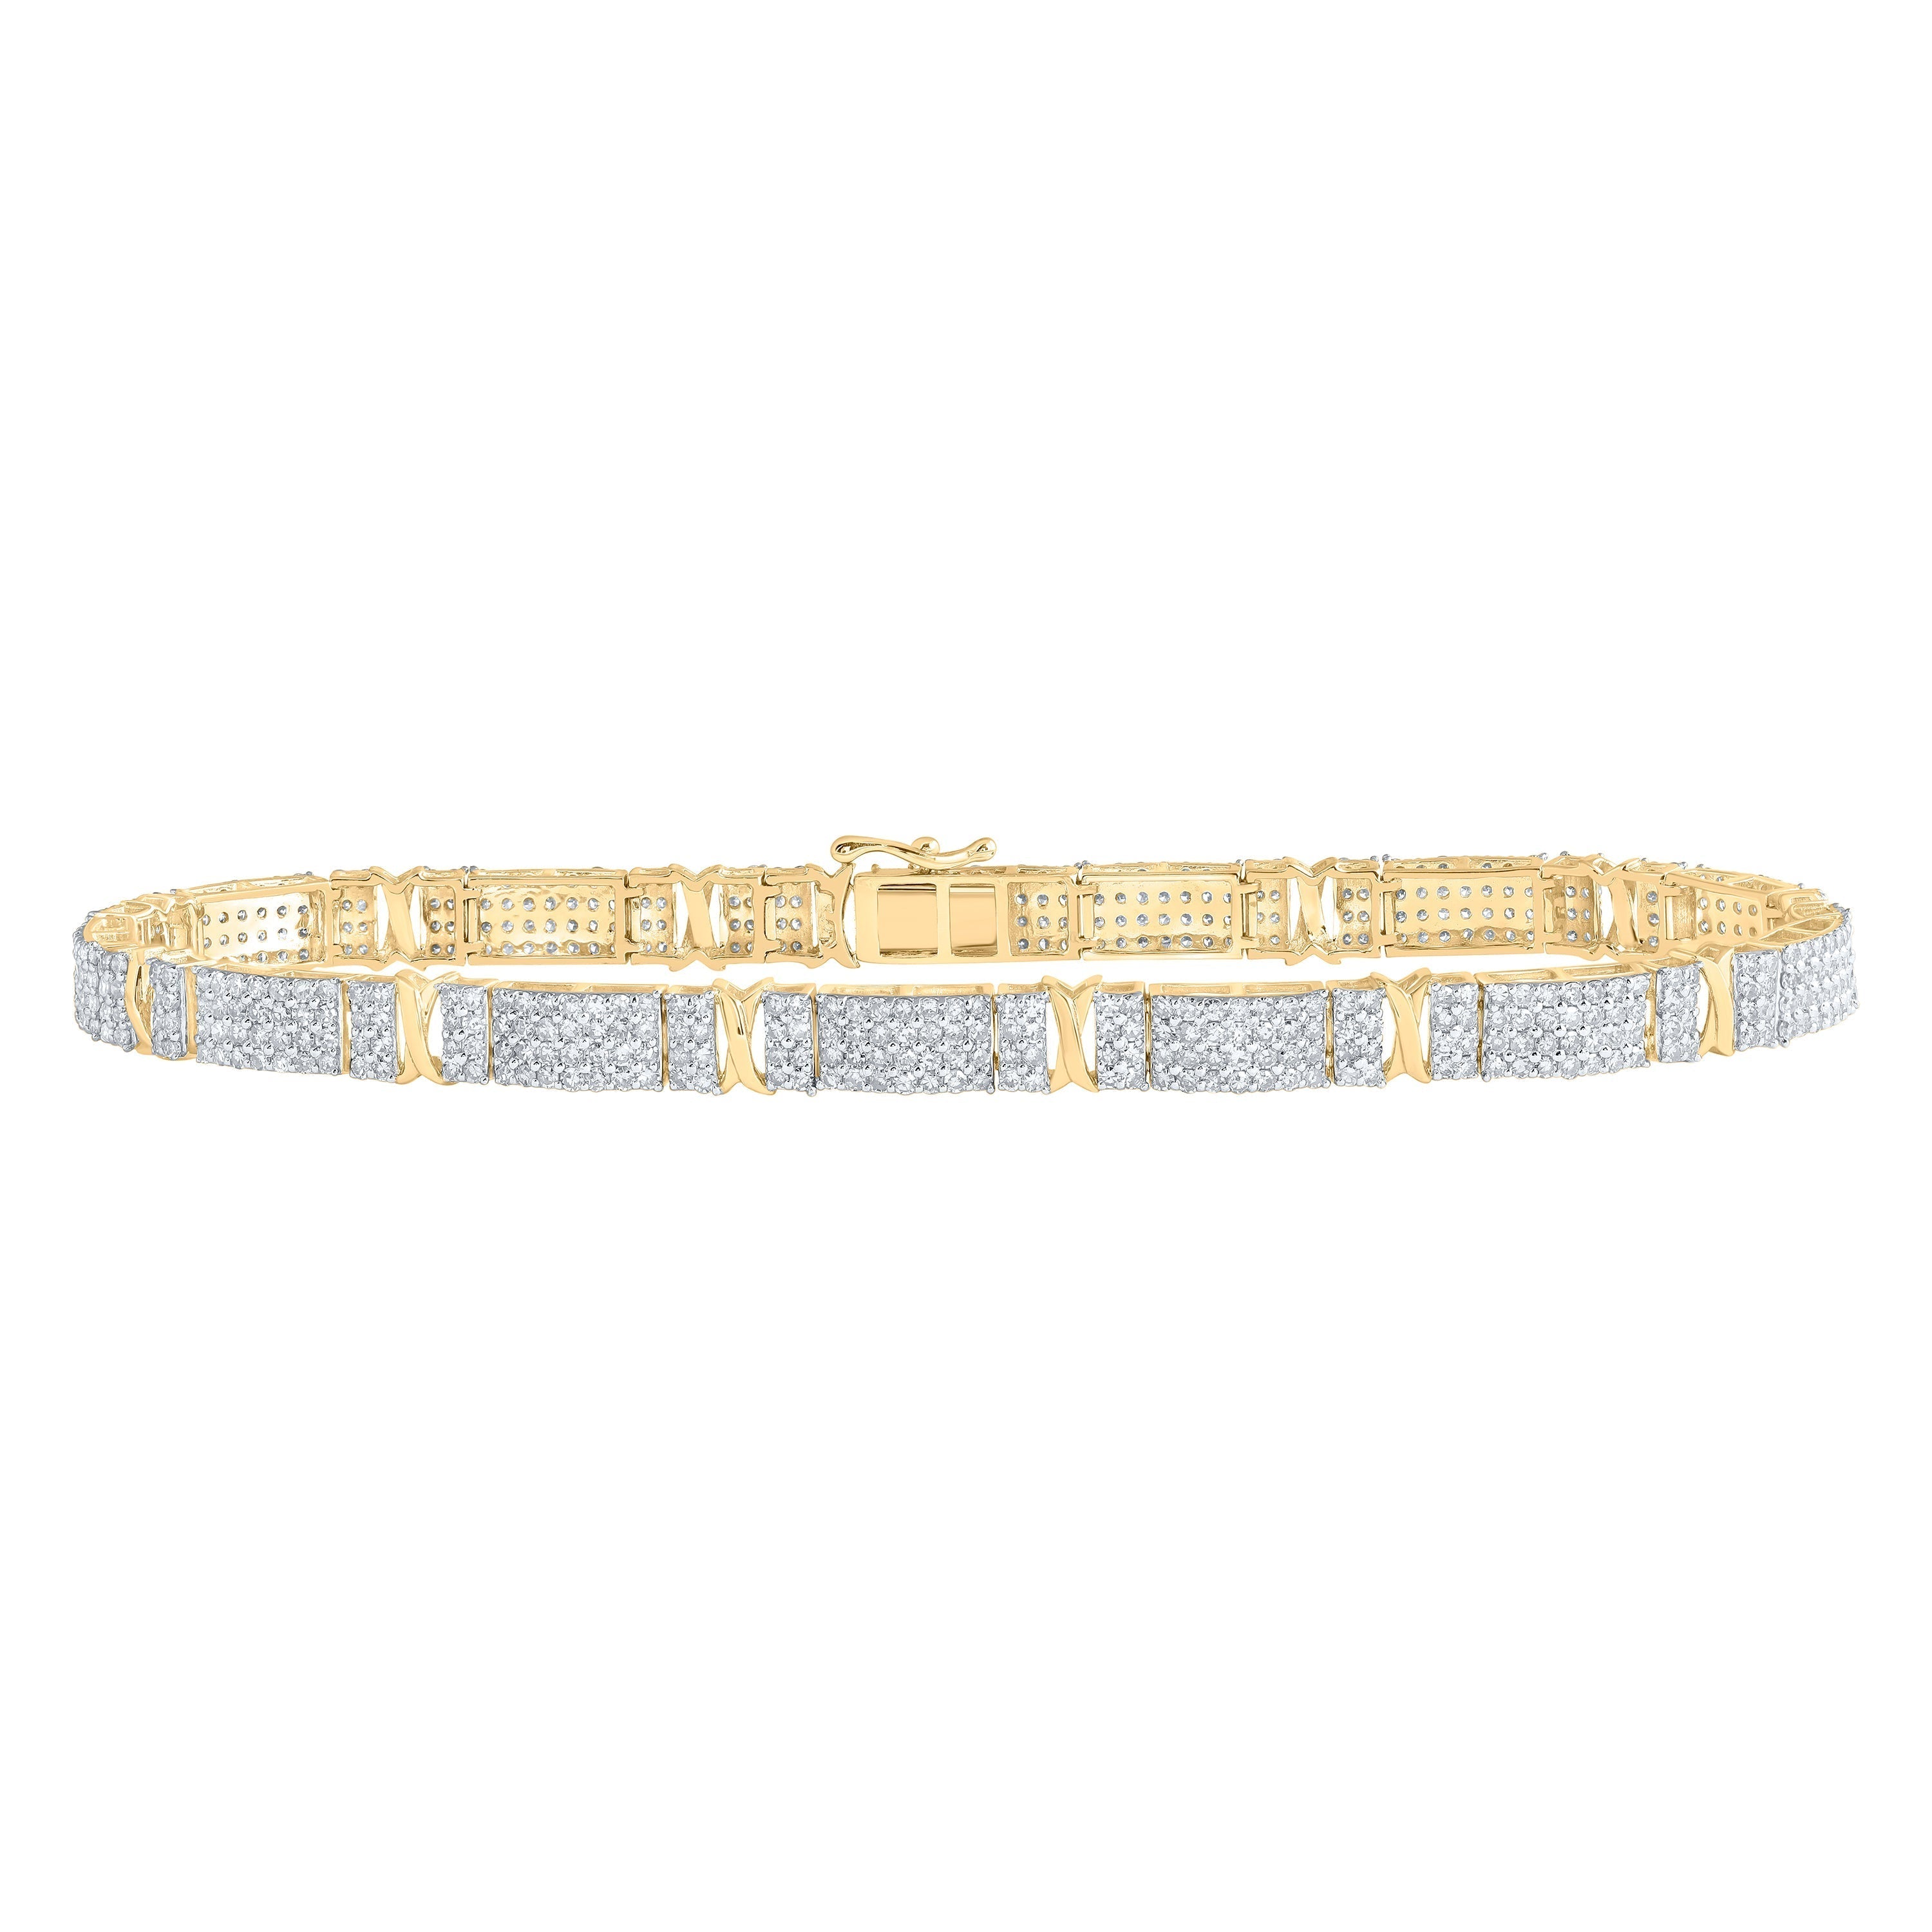 10kt Yellow Gold Mens Round Diamond 8.5-inch Link Bracelet 4-1/2 Cttw